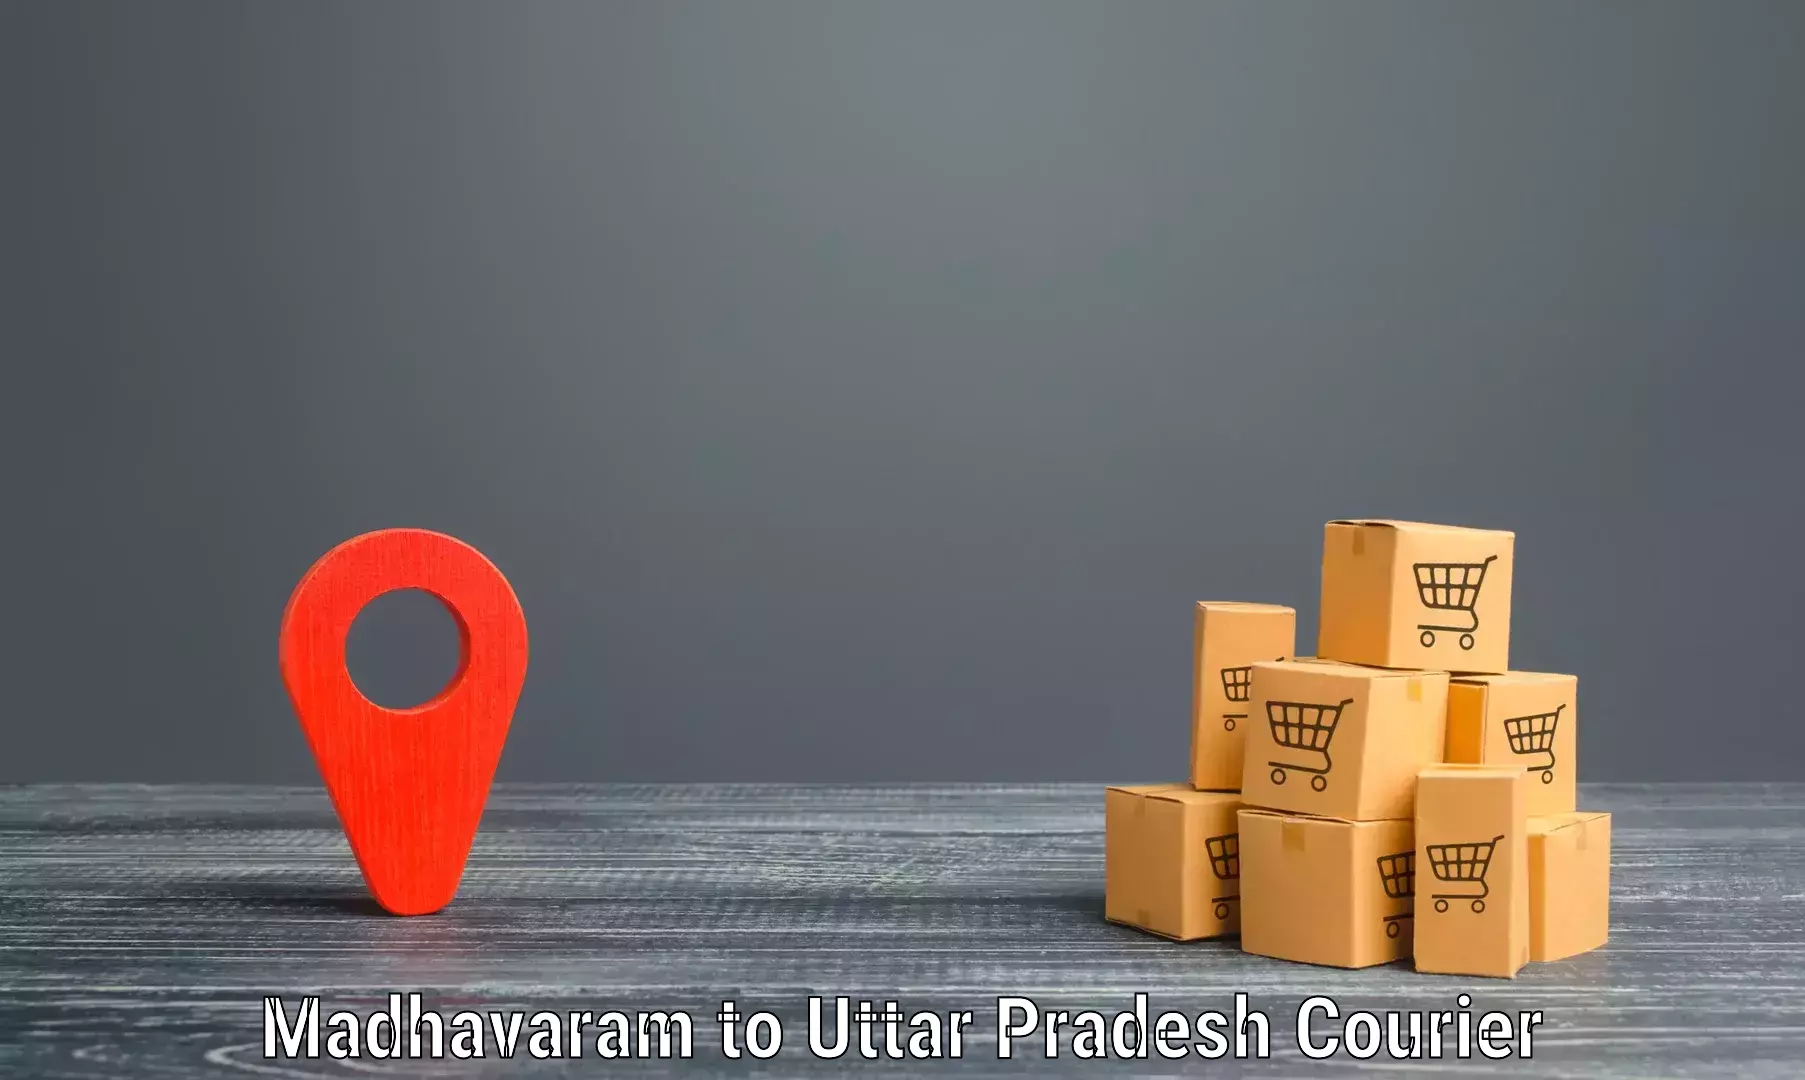 Courier service innovation Madhavaram to Chakia Chandauli